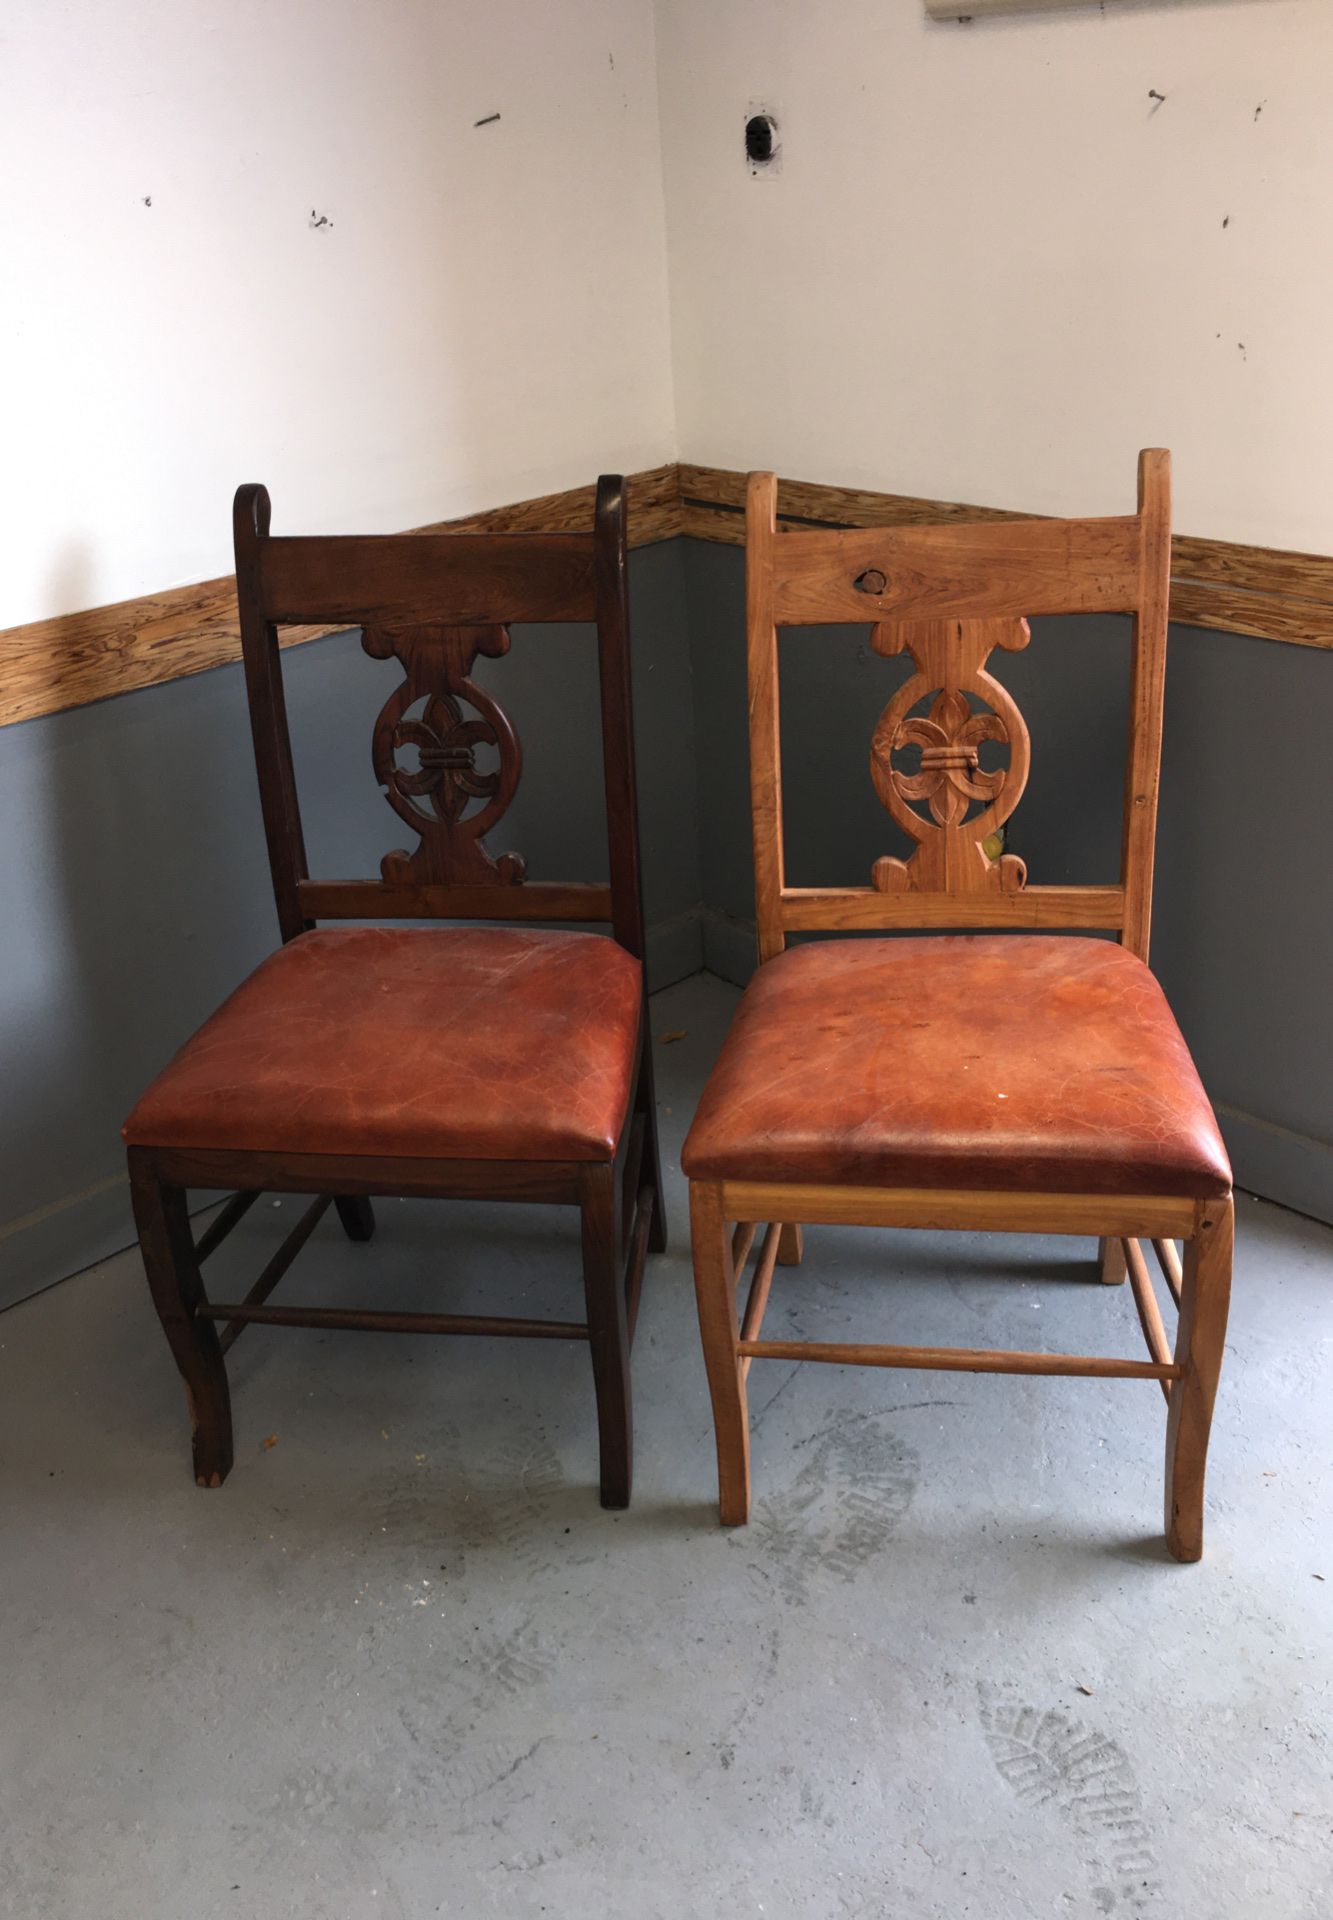 Chairs-Pair of Carved Chairs -15for Both-Little Haiti Warehouse Liquidation-Bryce LeVan Cushing Liquidator